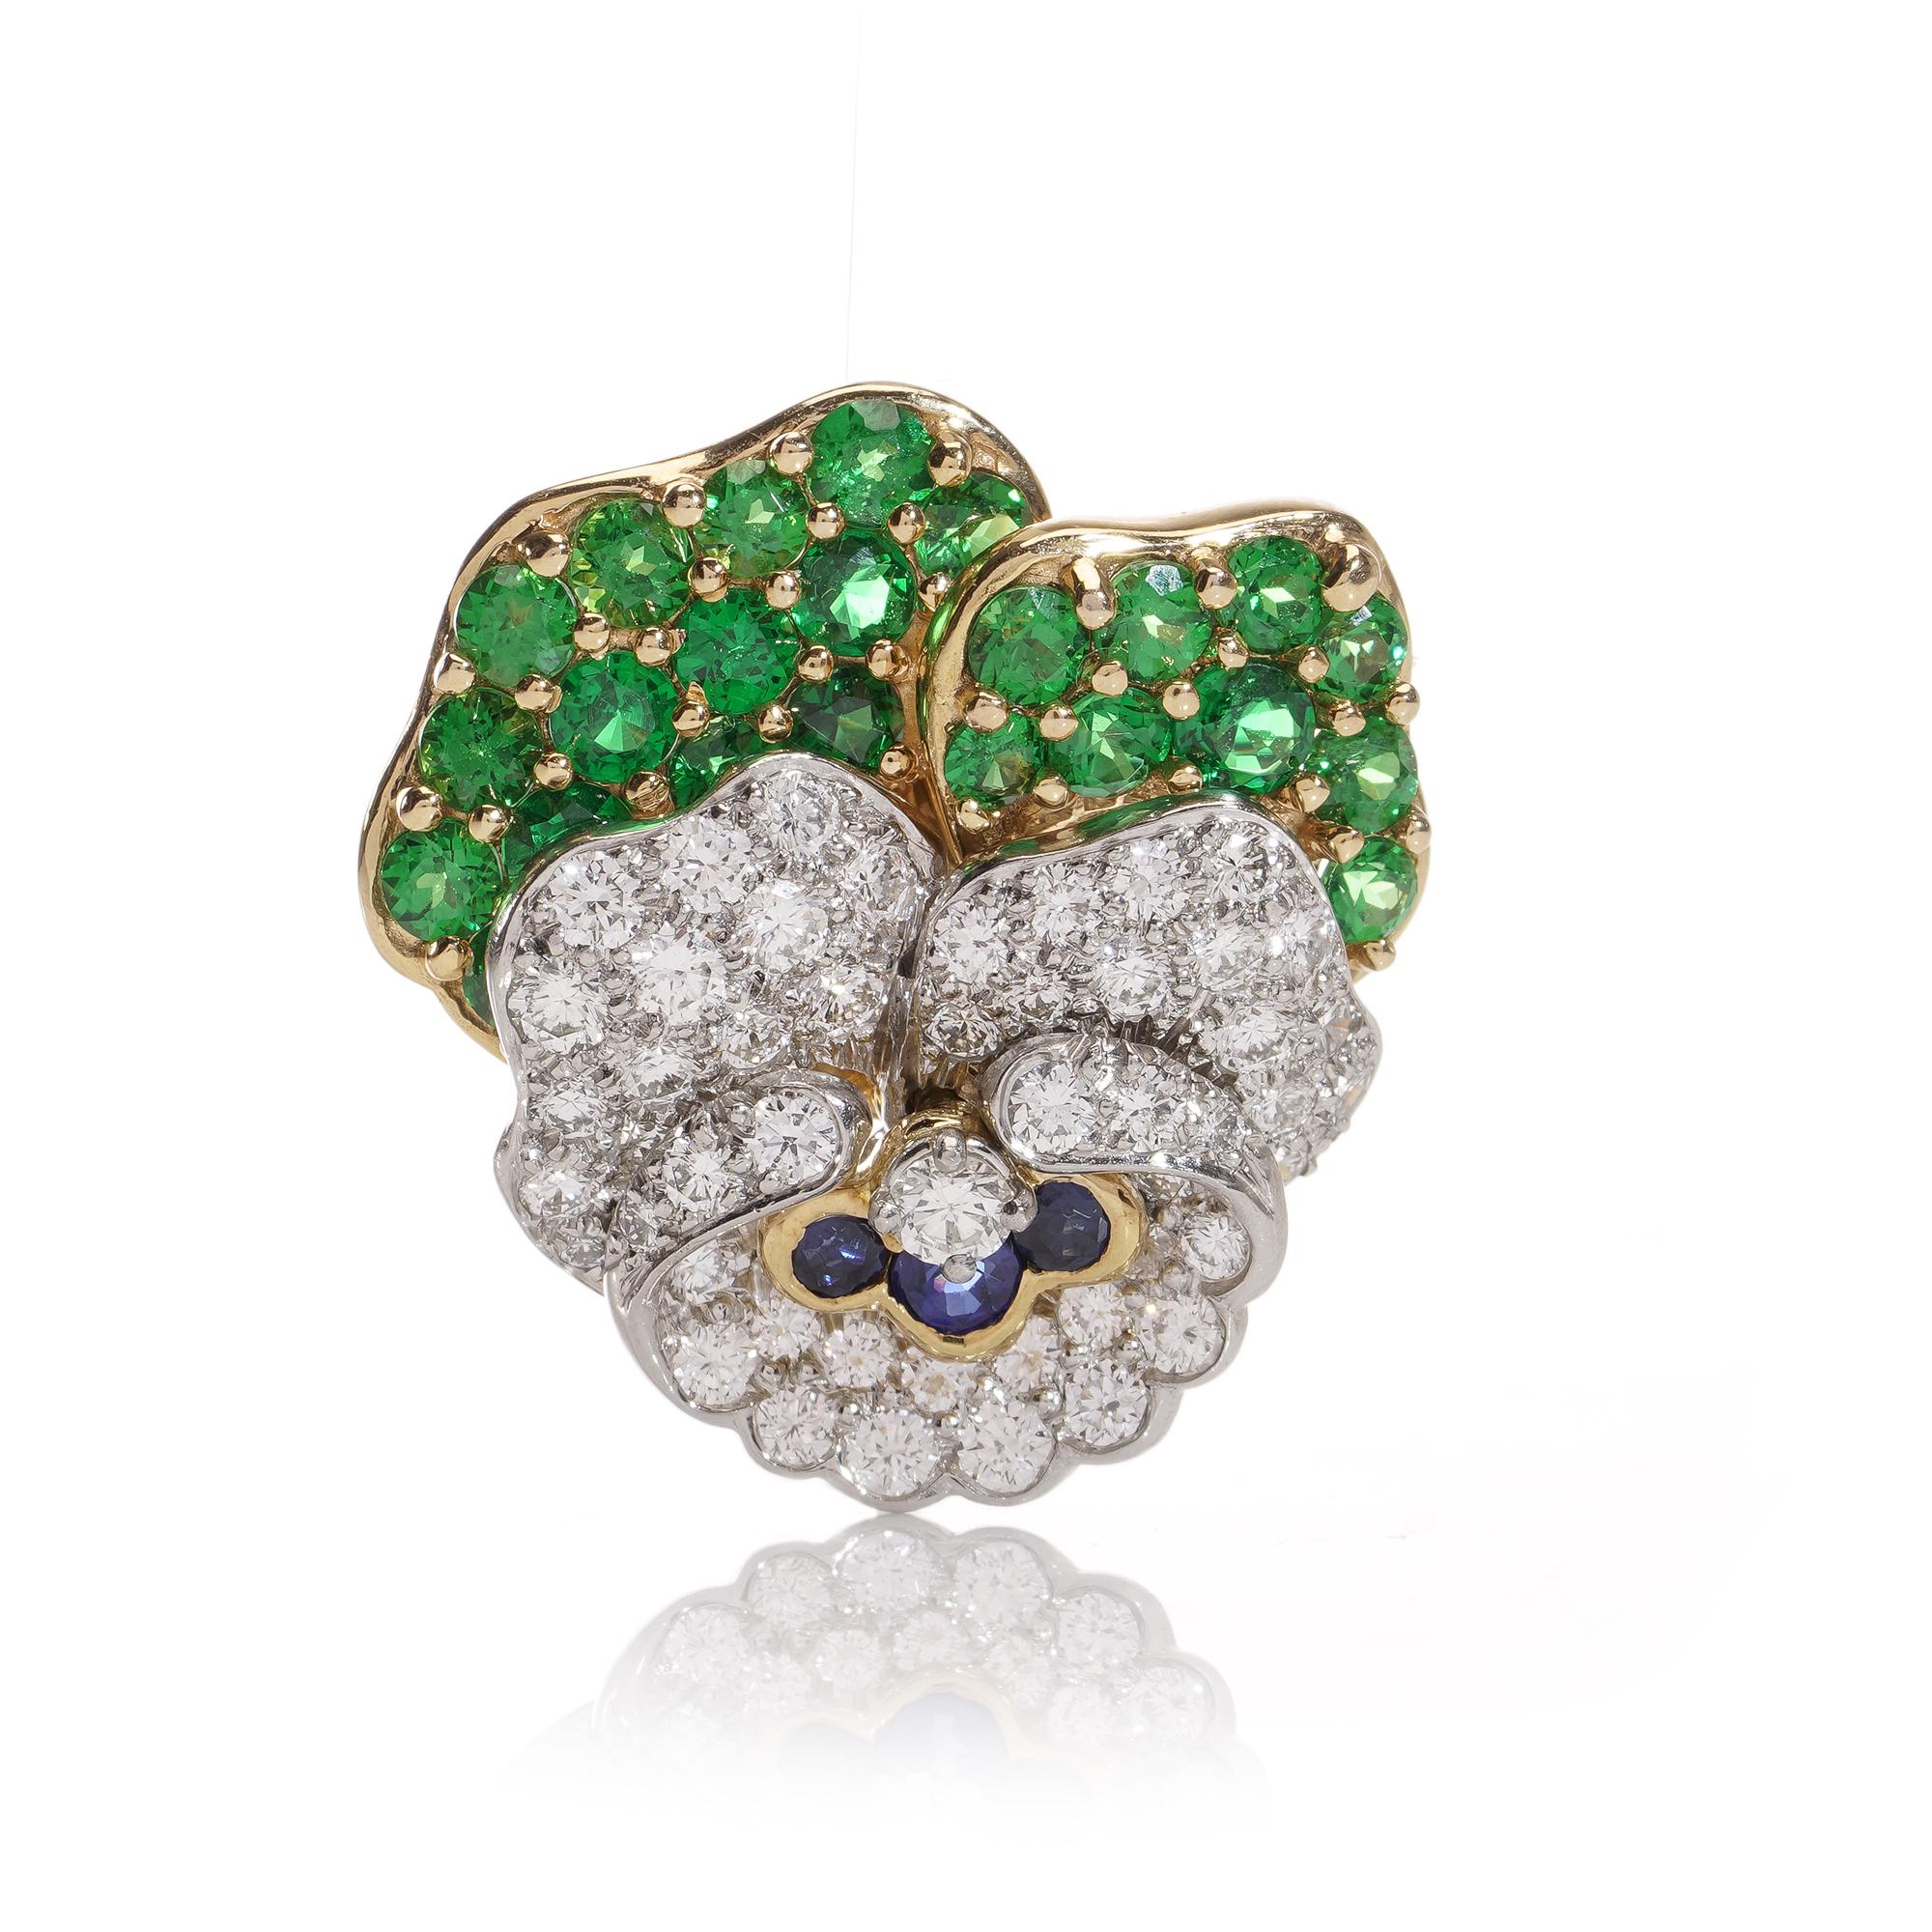 Tiffany & Co. Pansy Brooch with Diamonds, Sapphires, Tsavorite Garnets For Sale 4